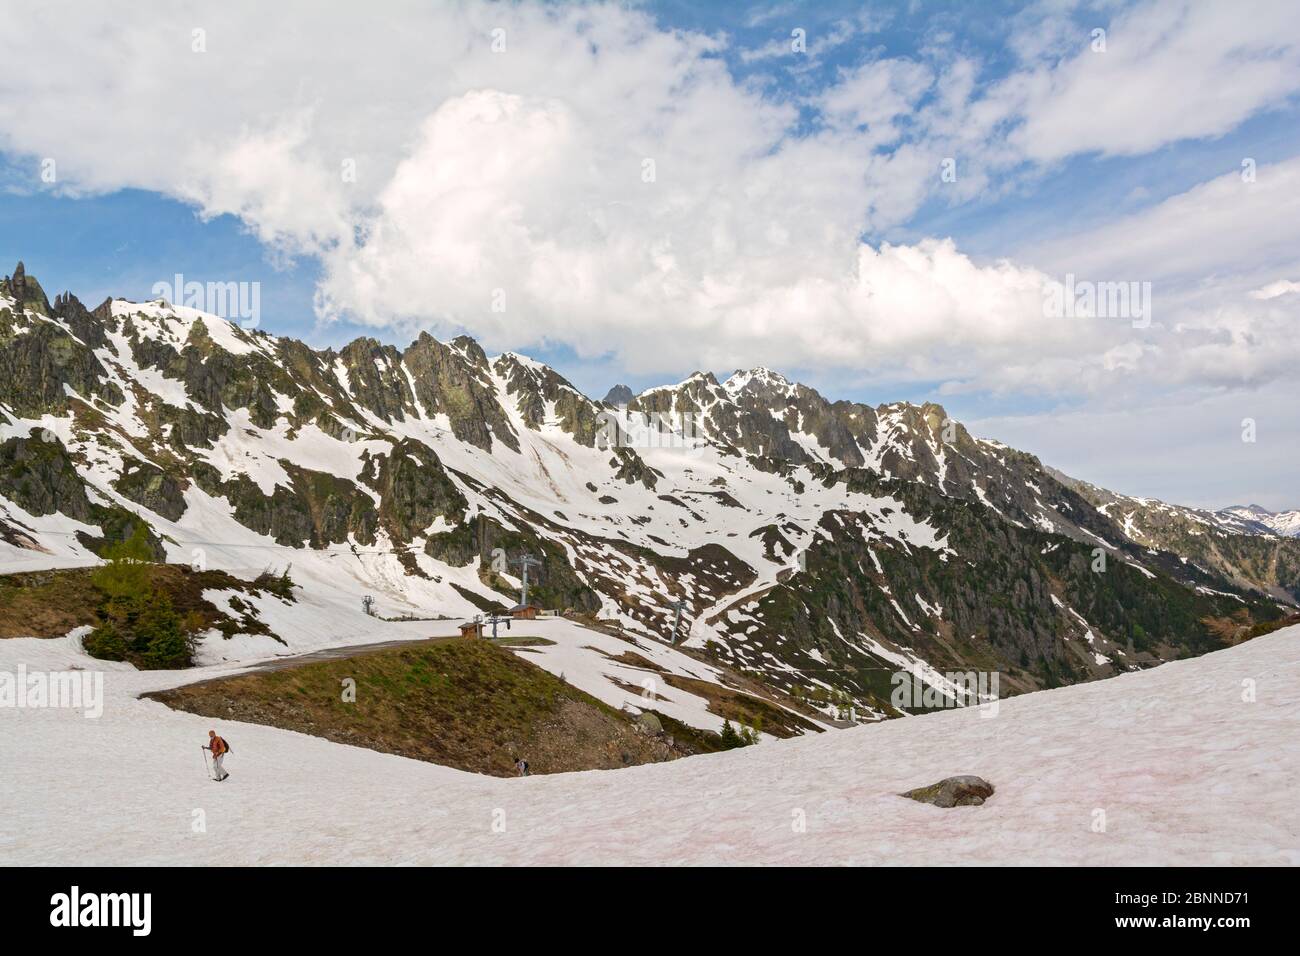 France, Chamonix, late May, top station of Plan Praz telecabine (gondola), ski run, spring snow melt, hikers Stock Photo